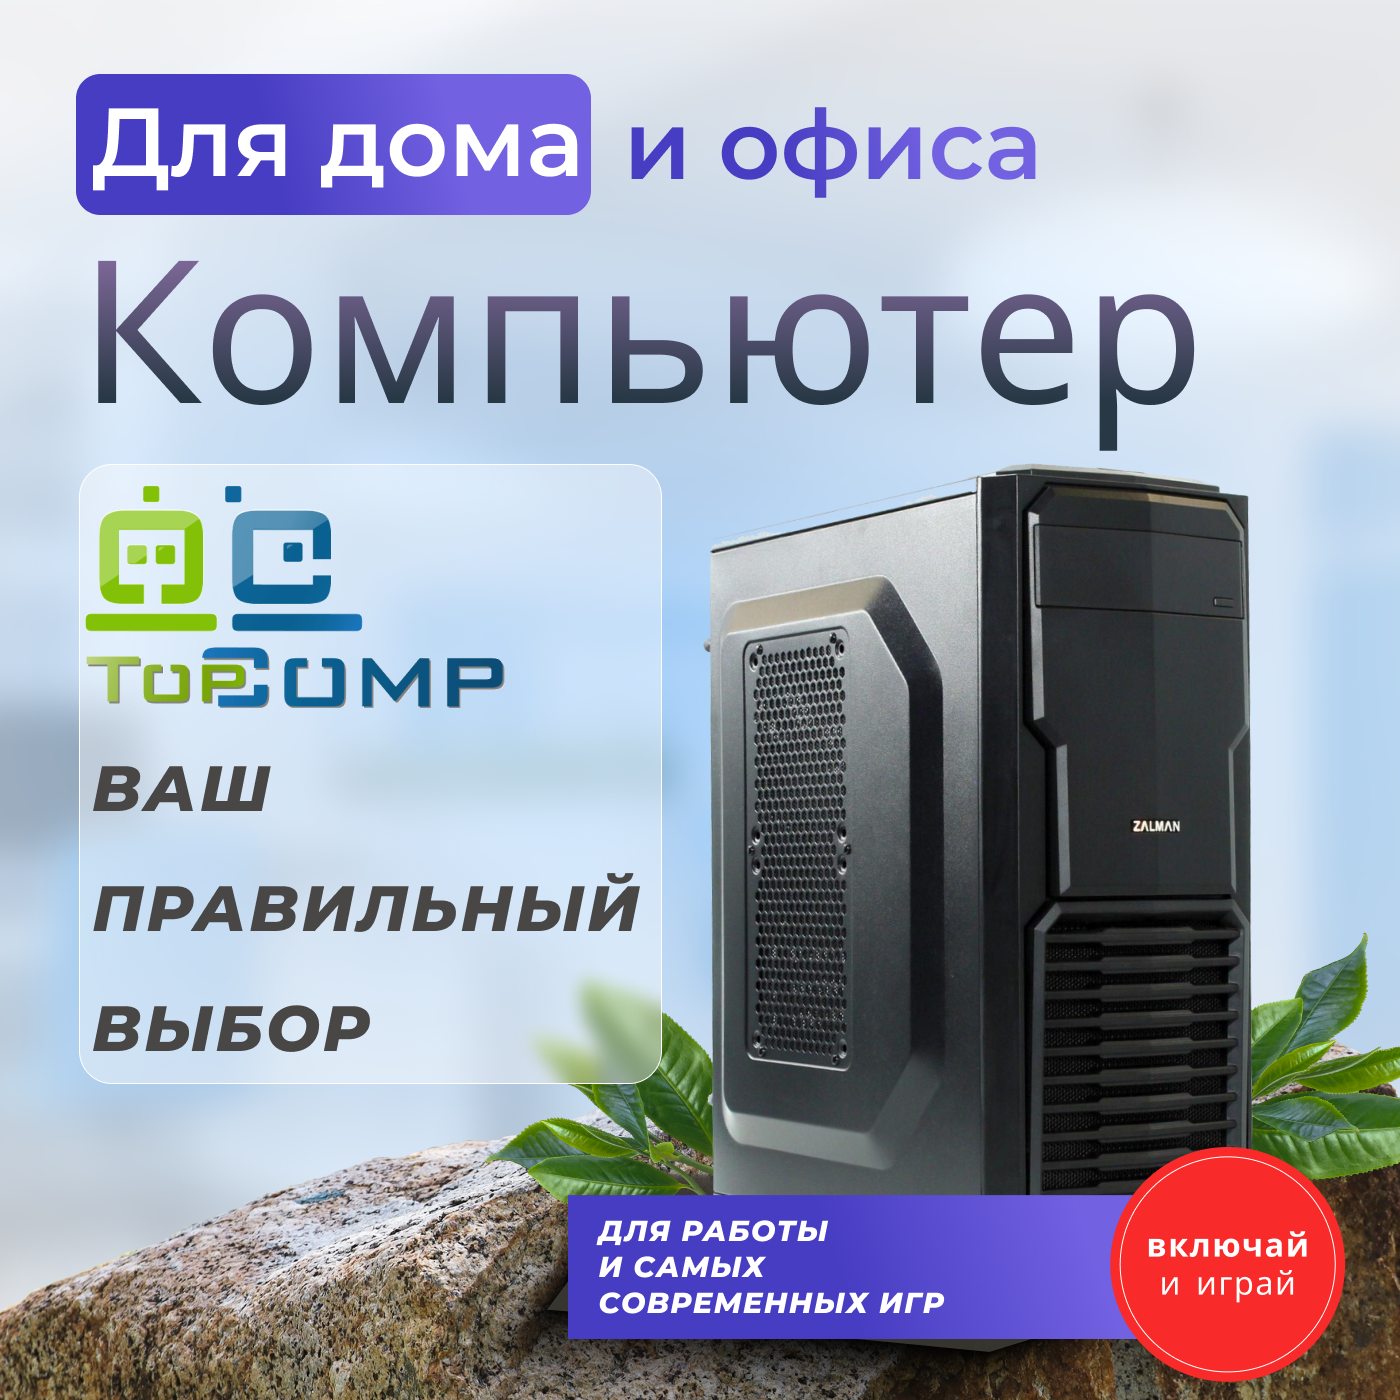 ПК для игр TopComp MG 5953438 (AMD Ryzen 5 3600 3.6 ГГц RAM 16 Гб 2480 Гб SSD|HDD NVIDIA GeForce GT 730 2 Гб Без ОС)